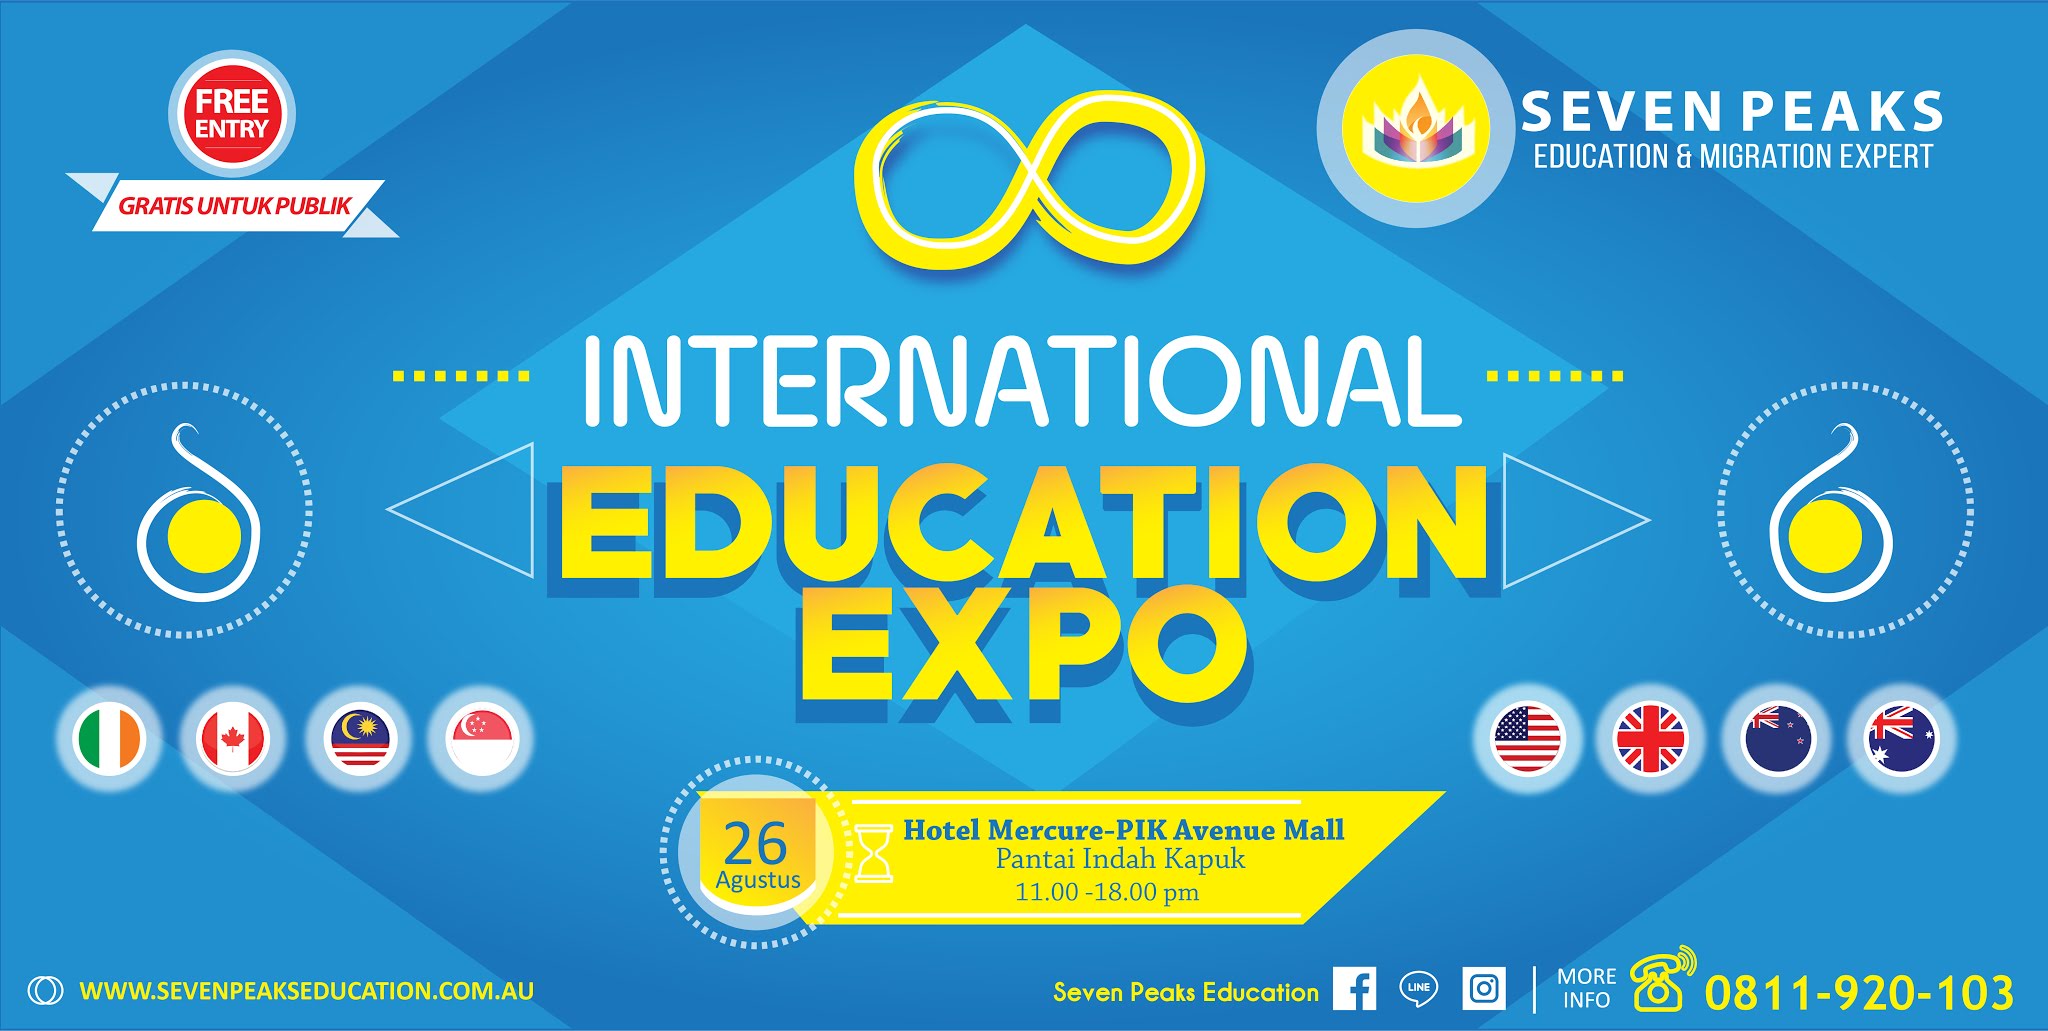 INTERNATIONAL EDUCATION EXPO 2018